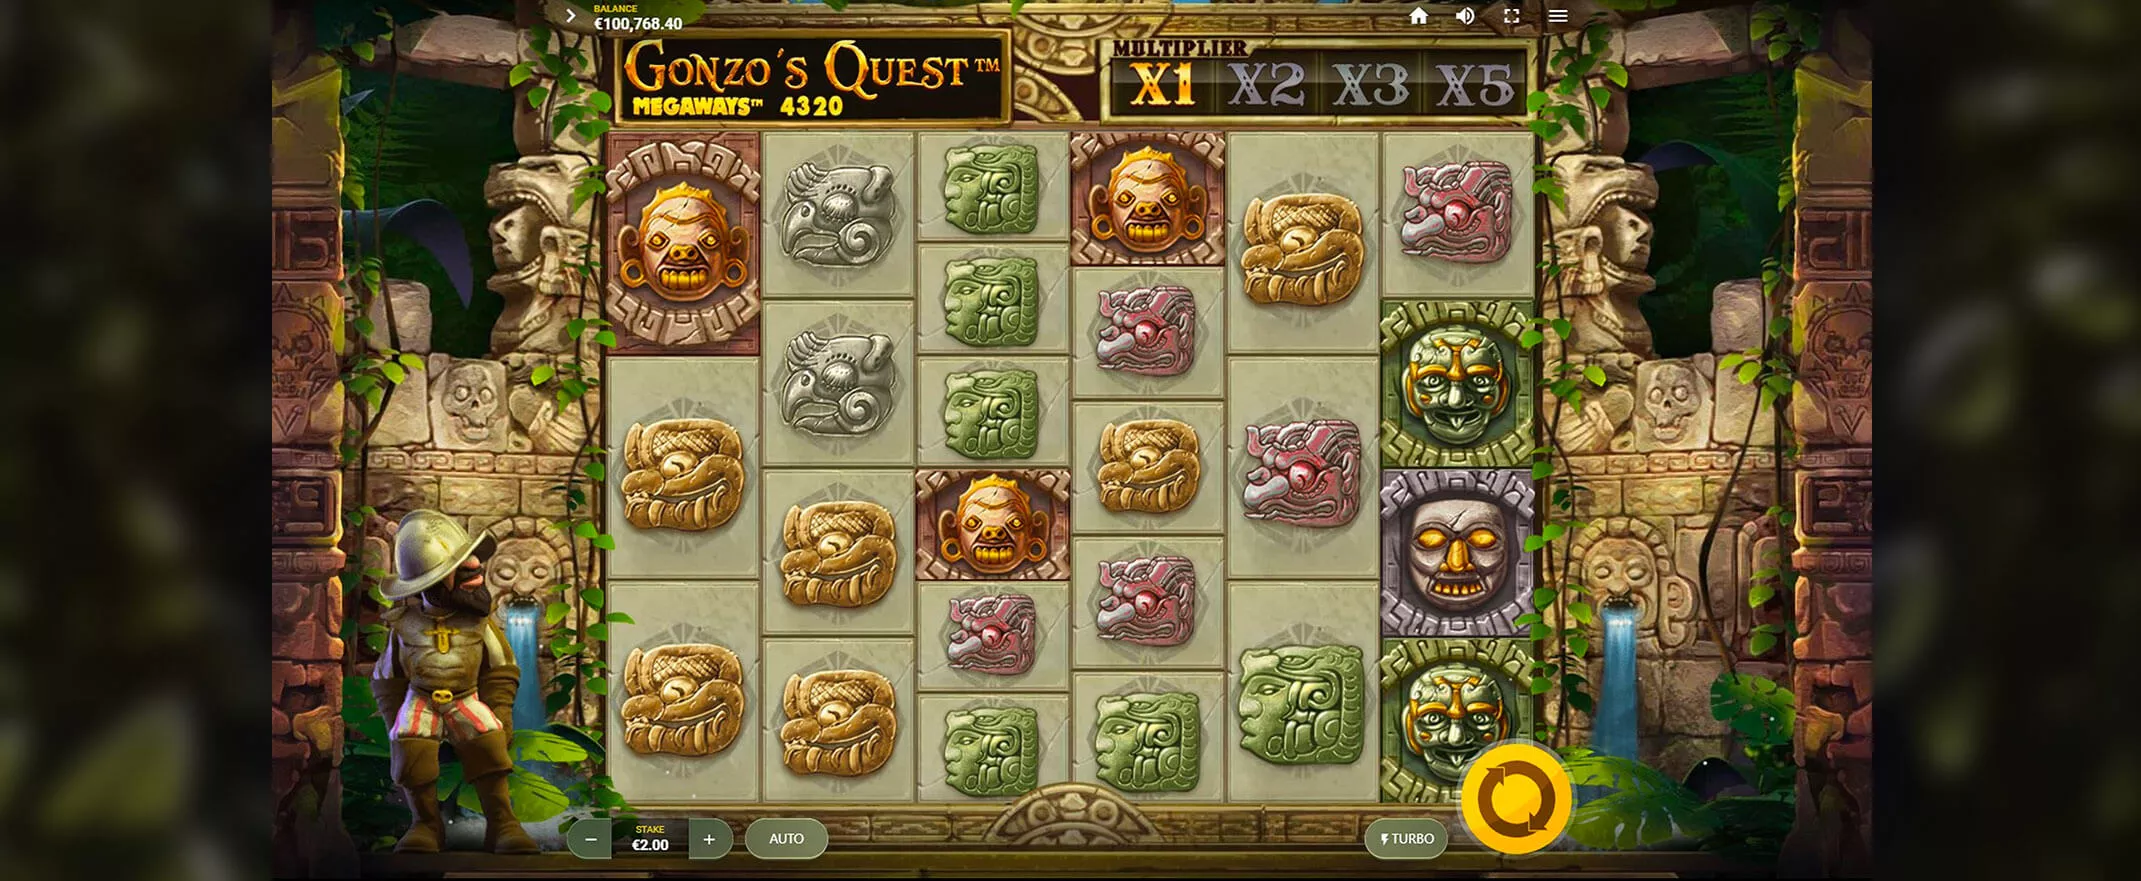 Gonzo's Quest Megaways slot screenshot of the reels